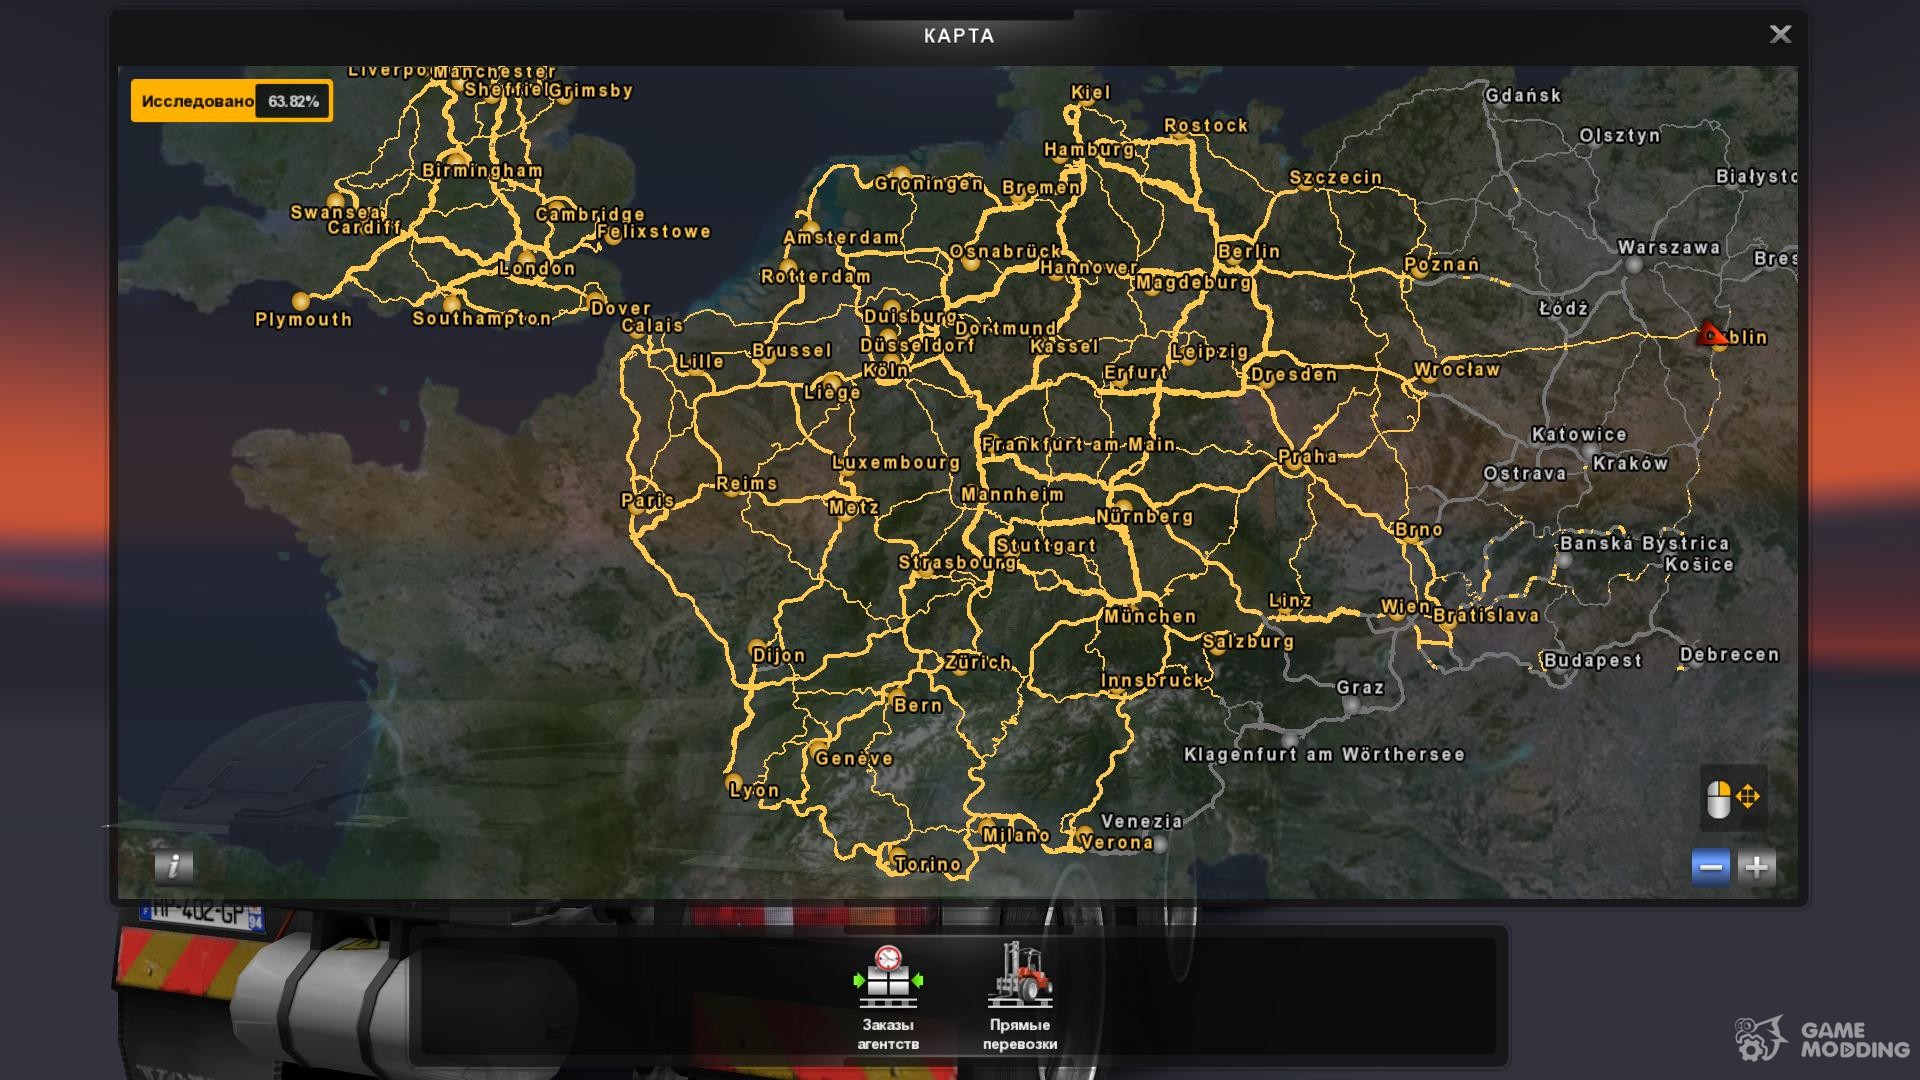 Euro Bus Simulator 2012 Full Version